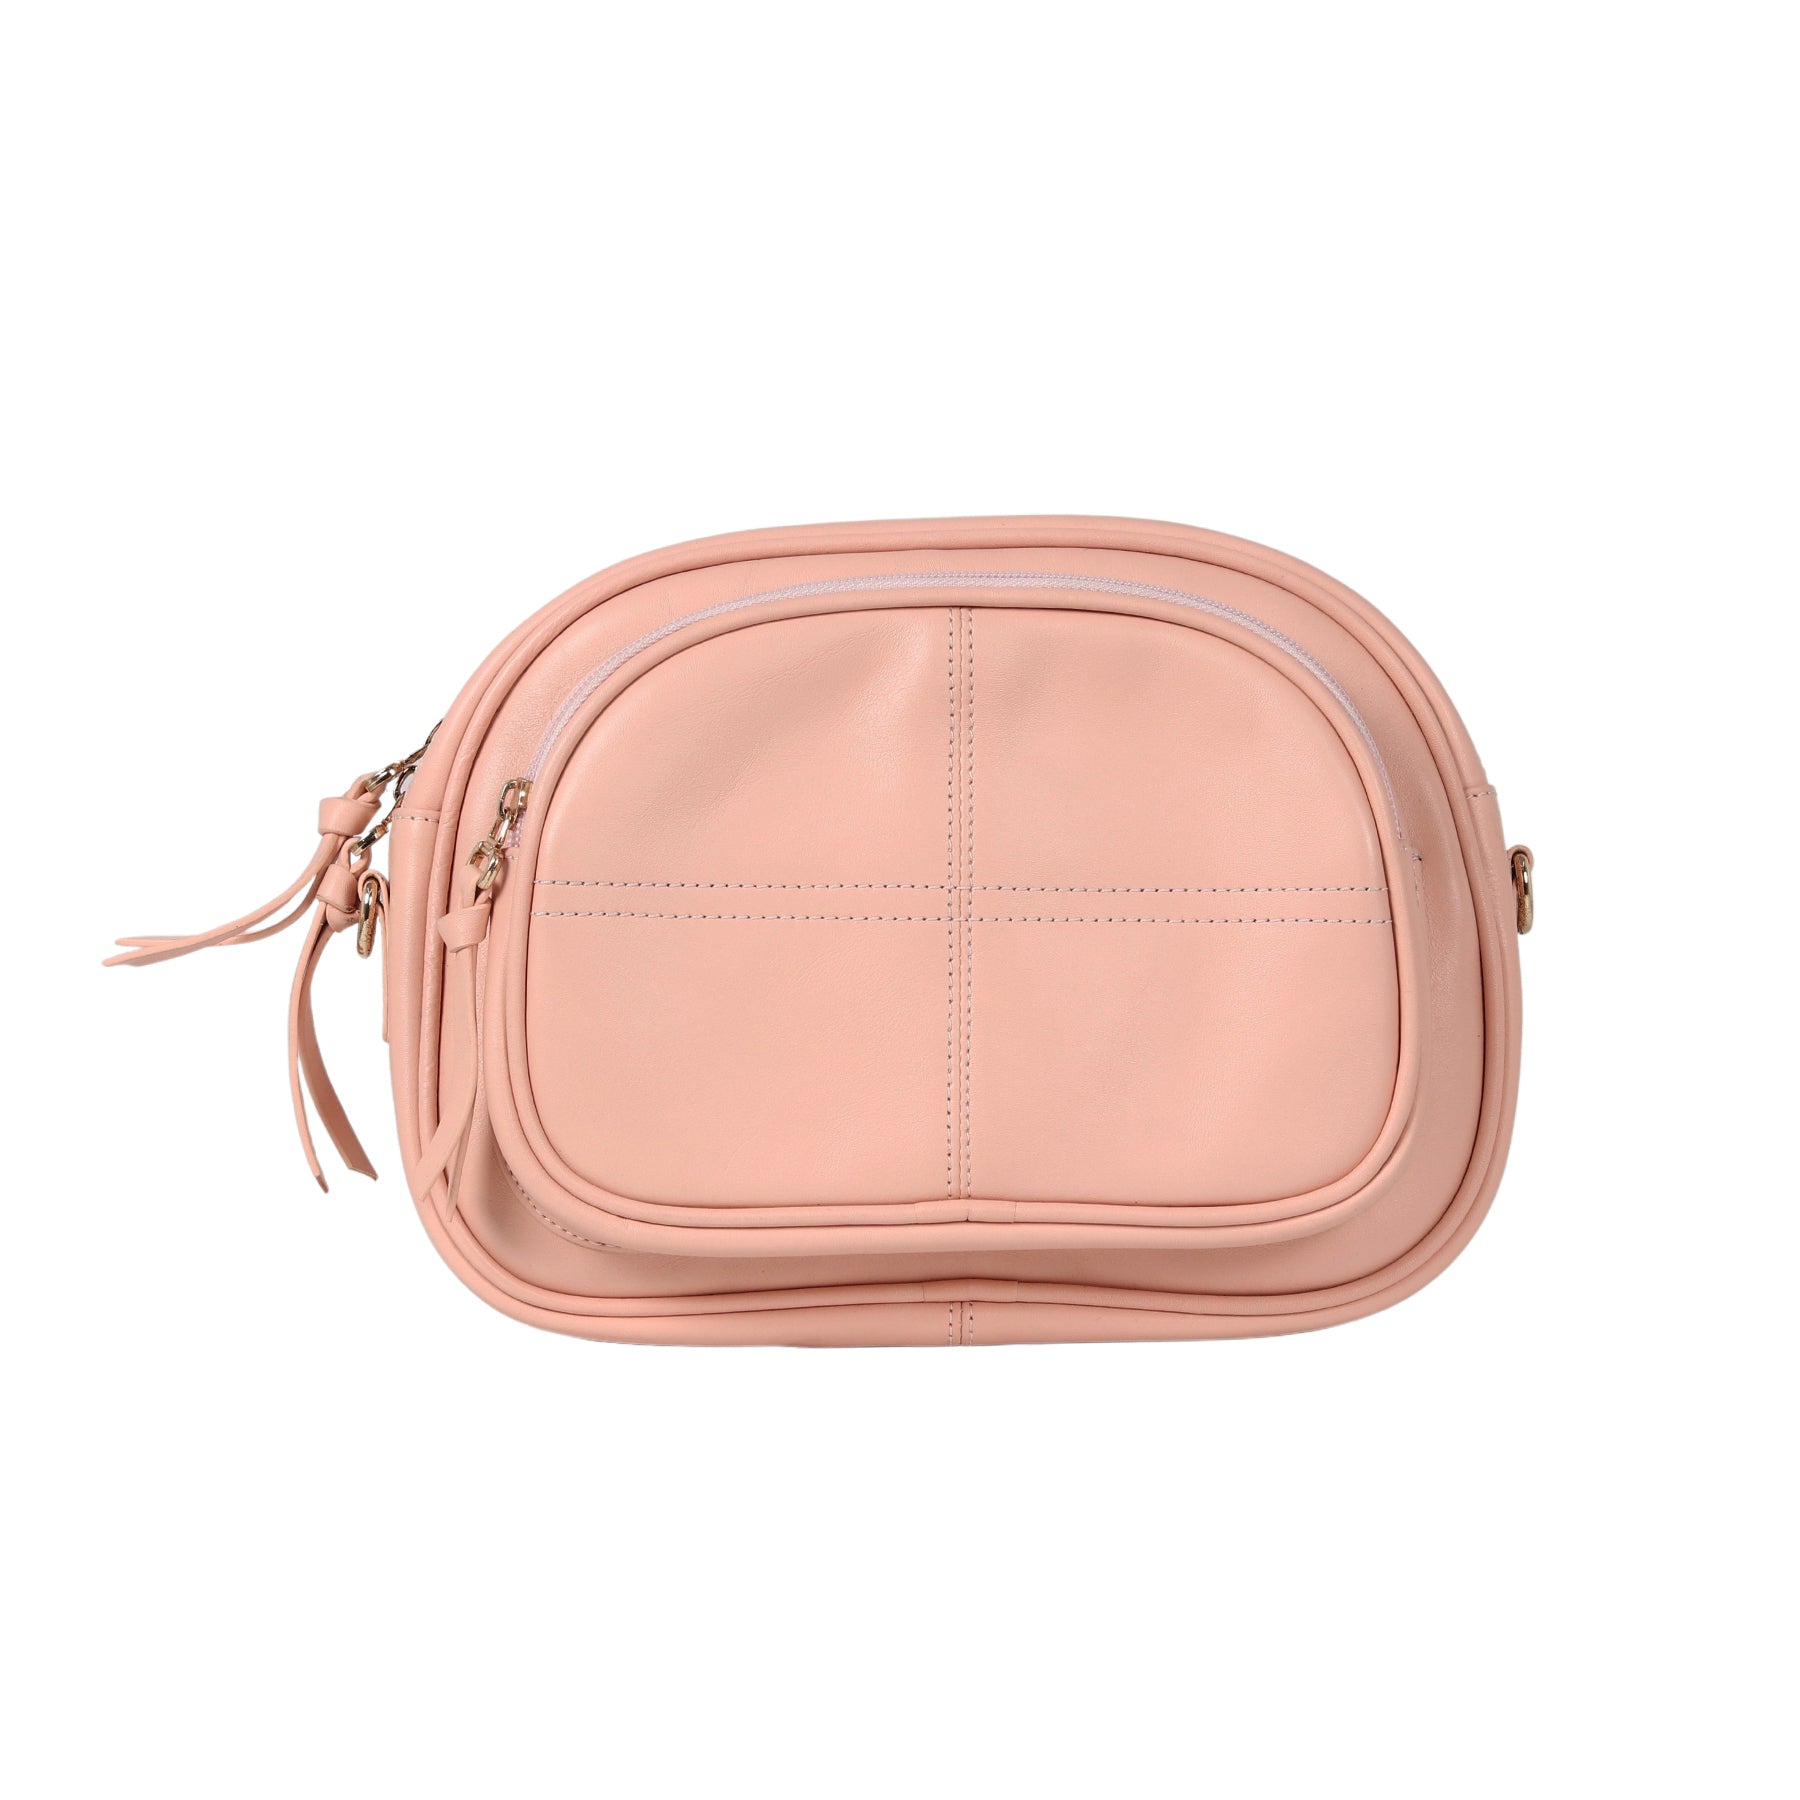 Zays Premium Leather Fashionable Ladies Hand Bag (Light Pink) - ZAYSBG08